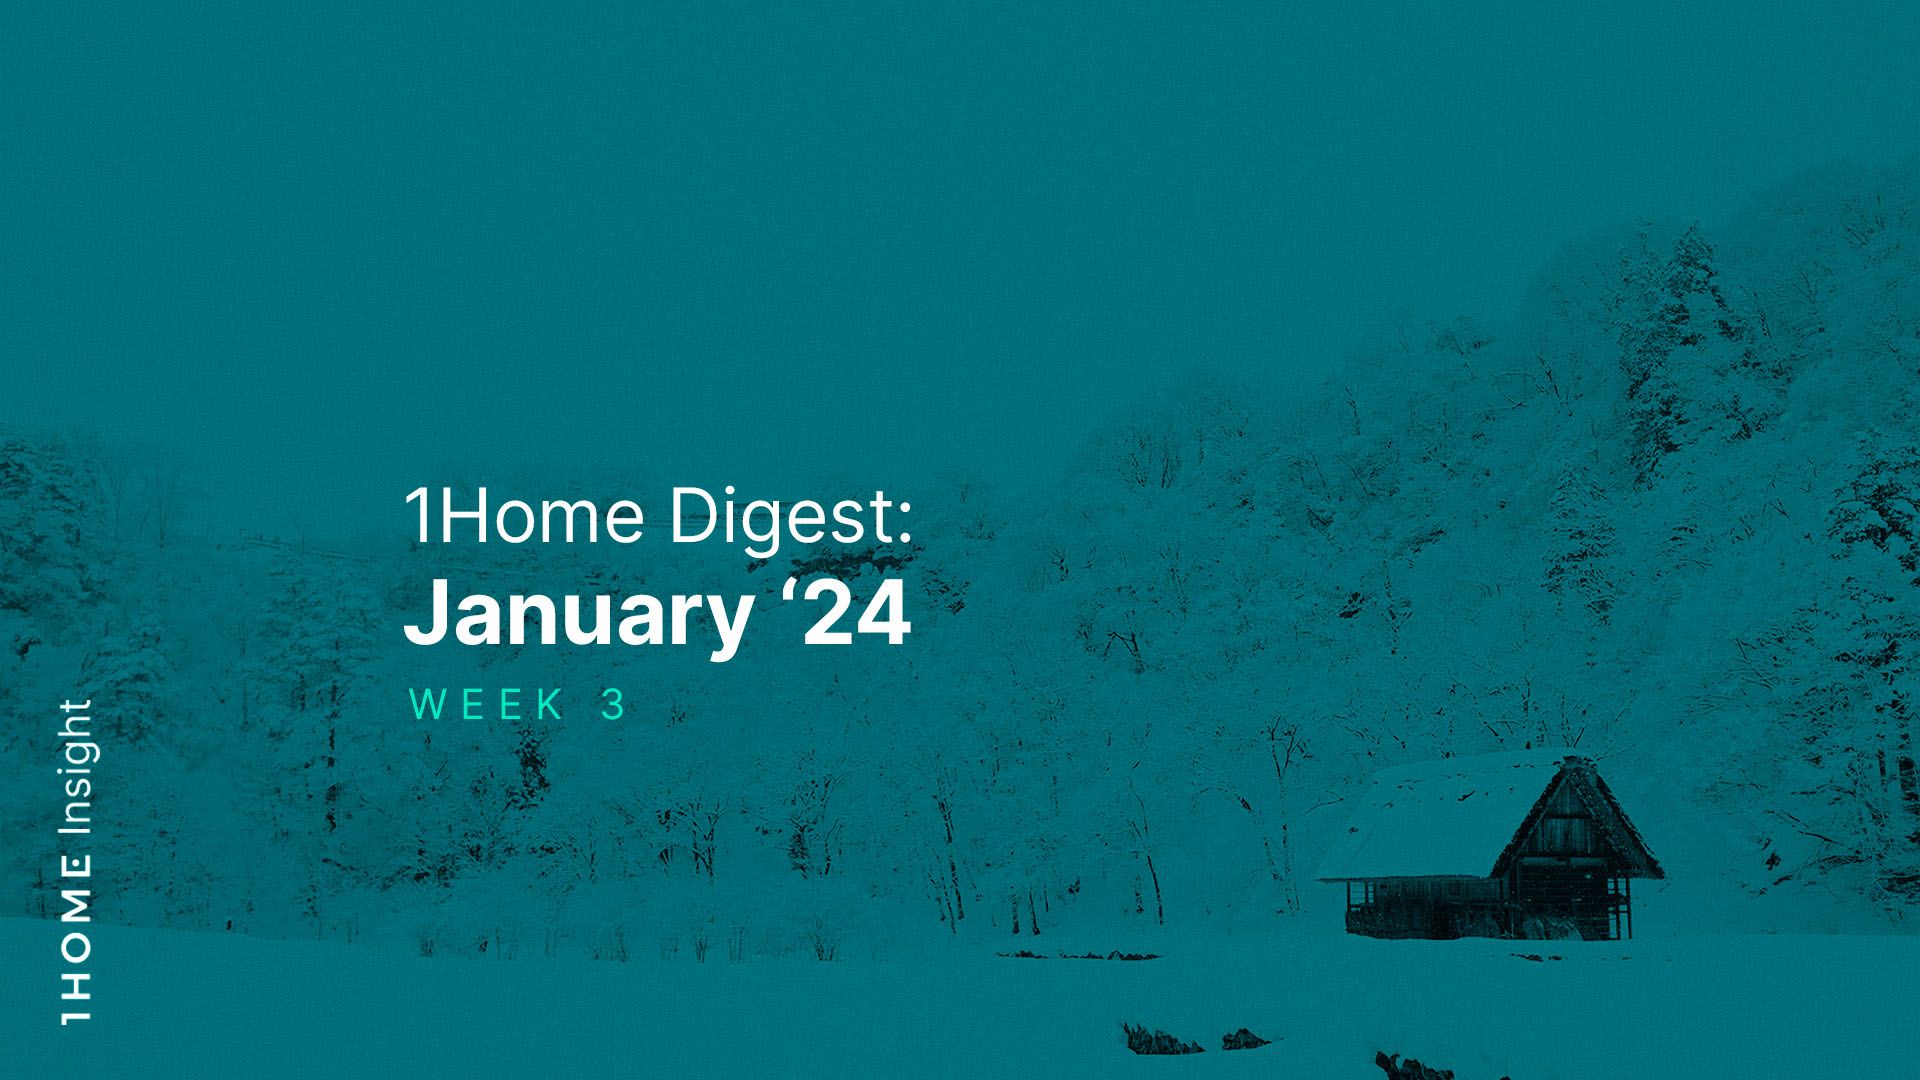 1Home Digest: January '24 - Week 3